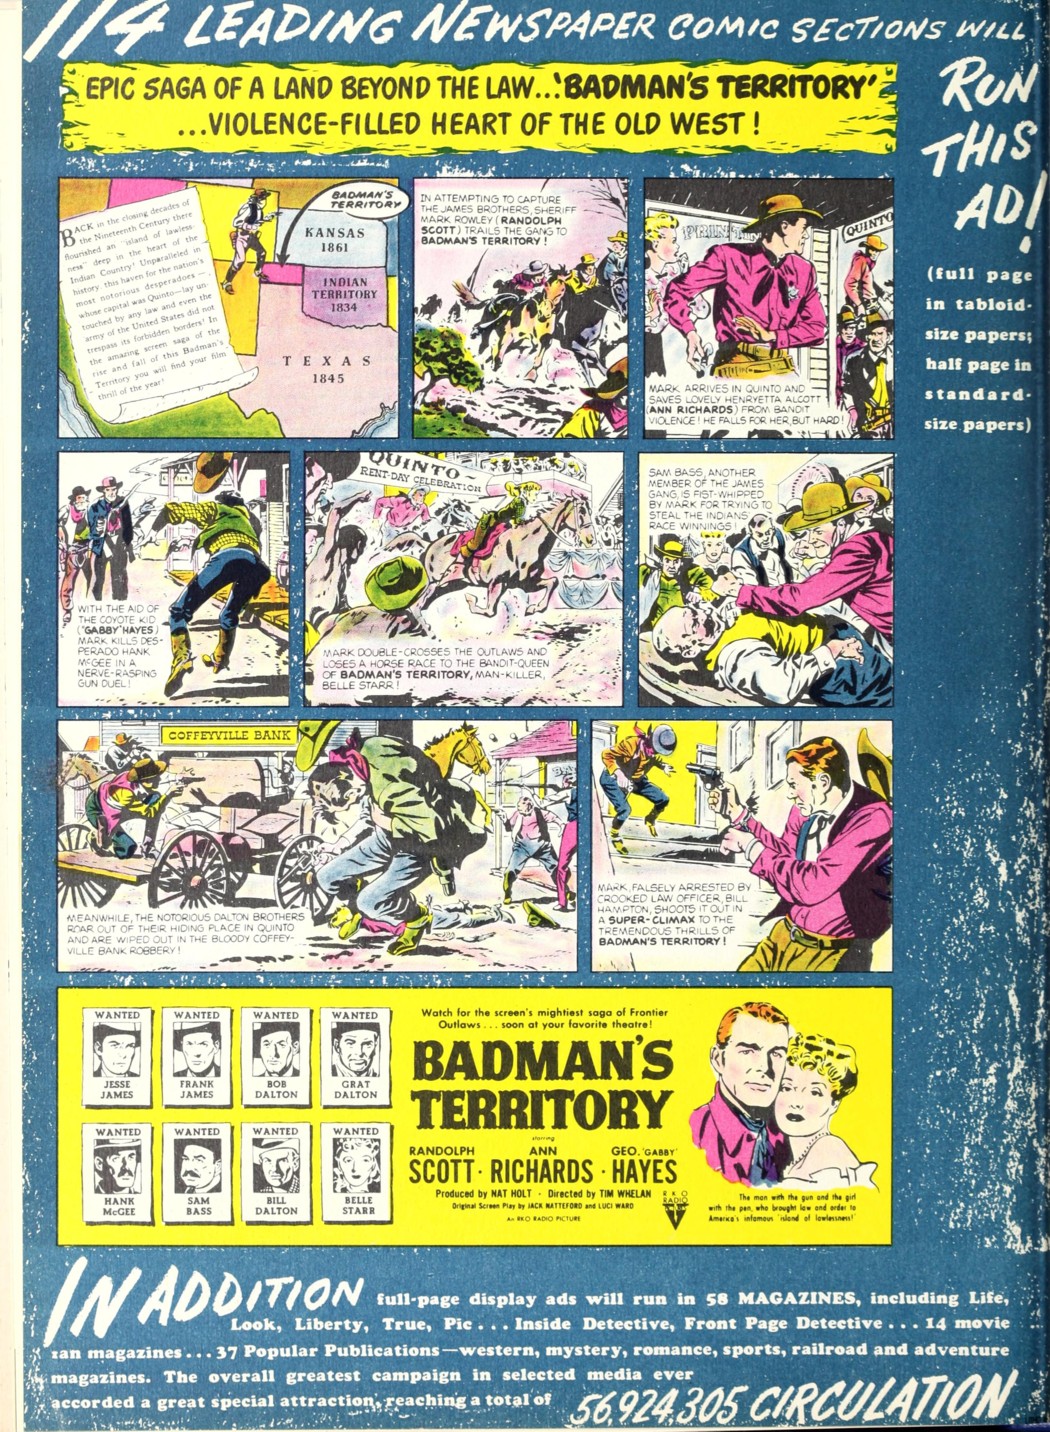 Badman's Territory one page comics advertisement